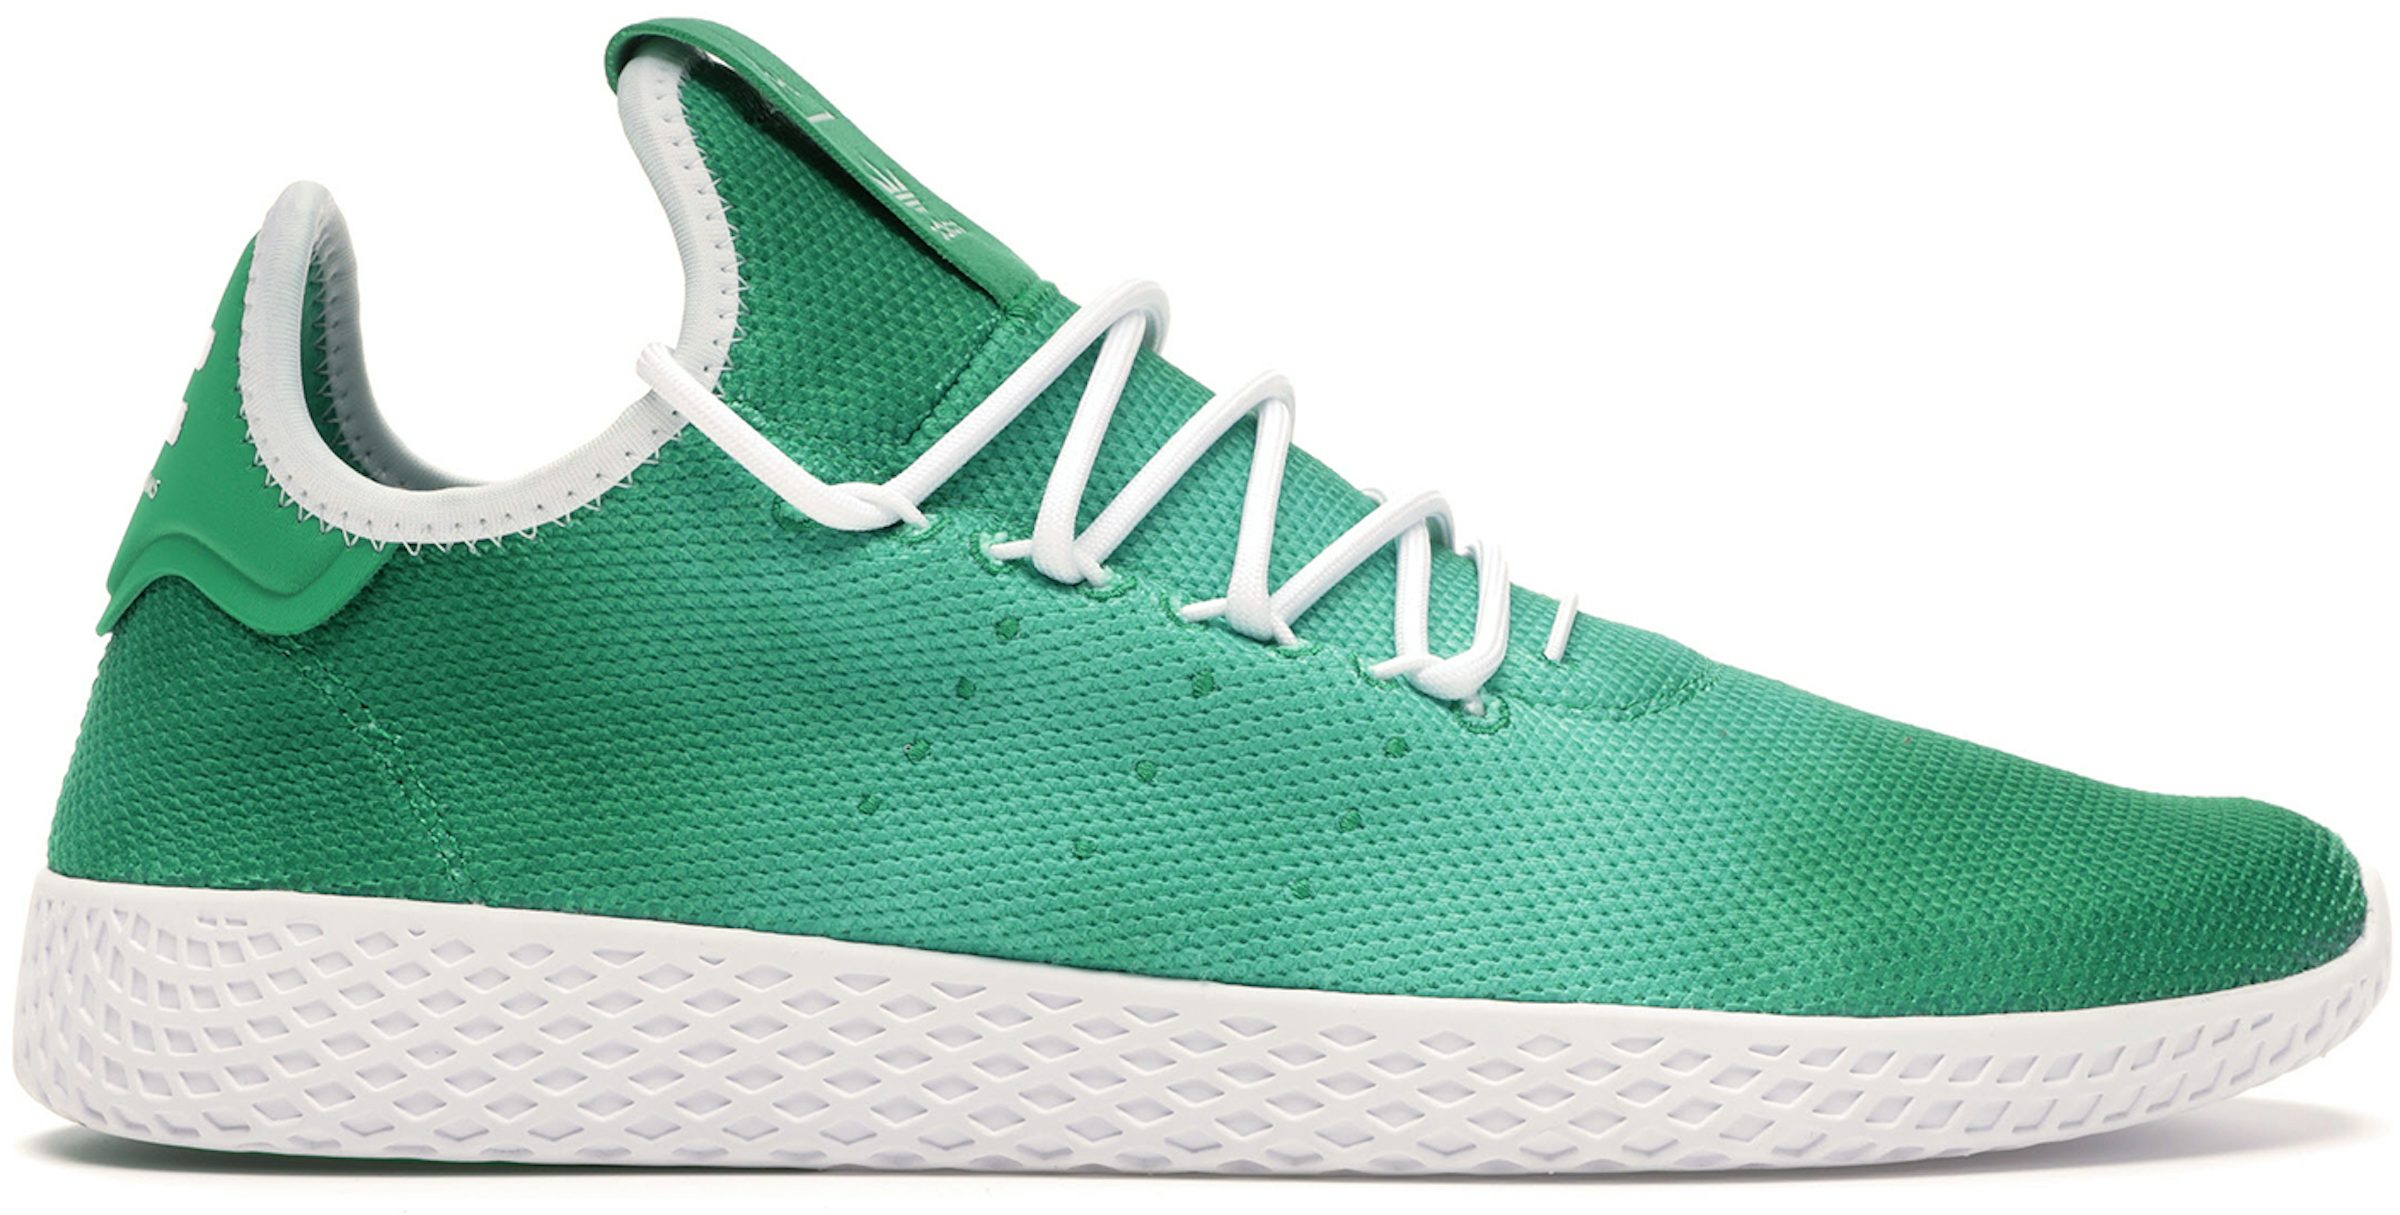 Pharrell Williams x adidas Tennis Hu White Green - StockX News